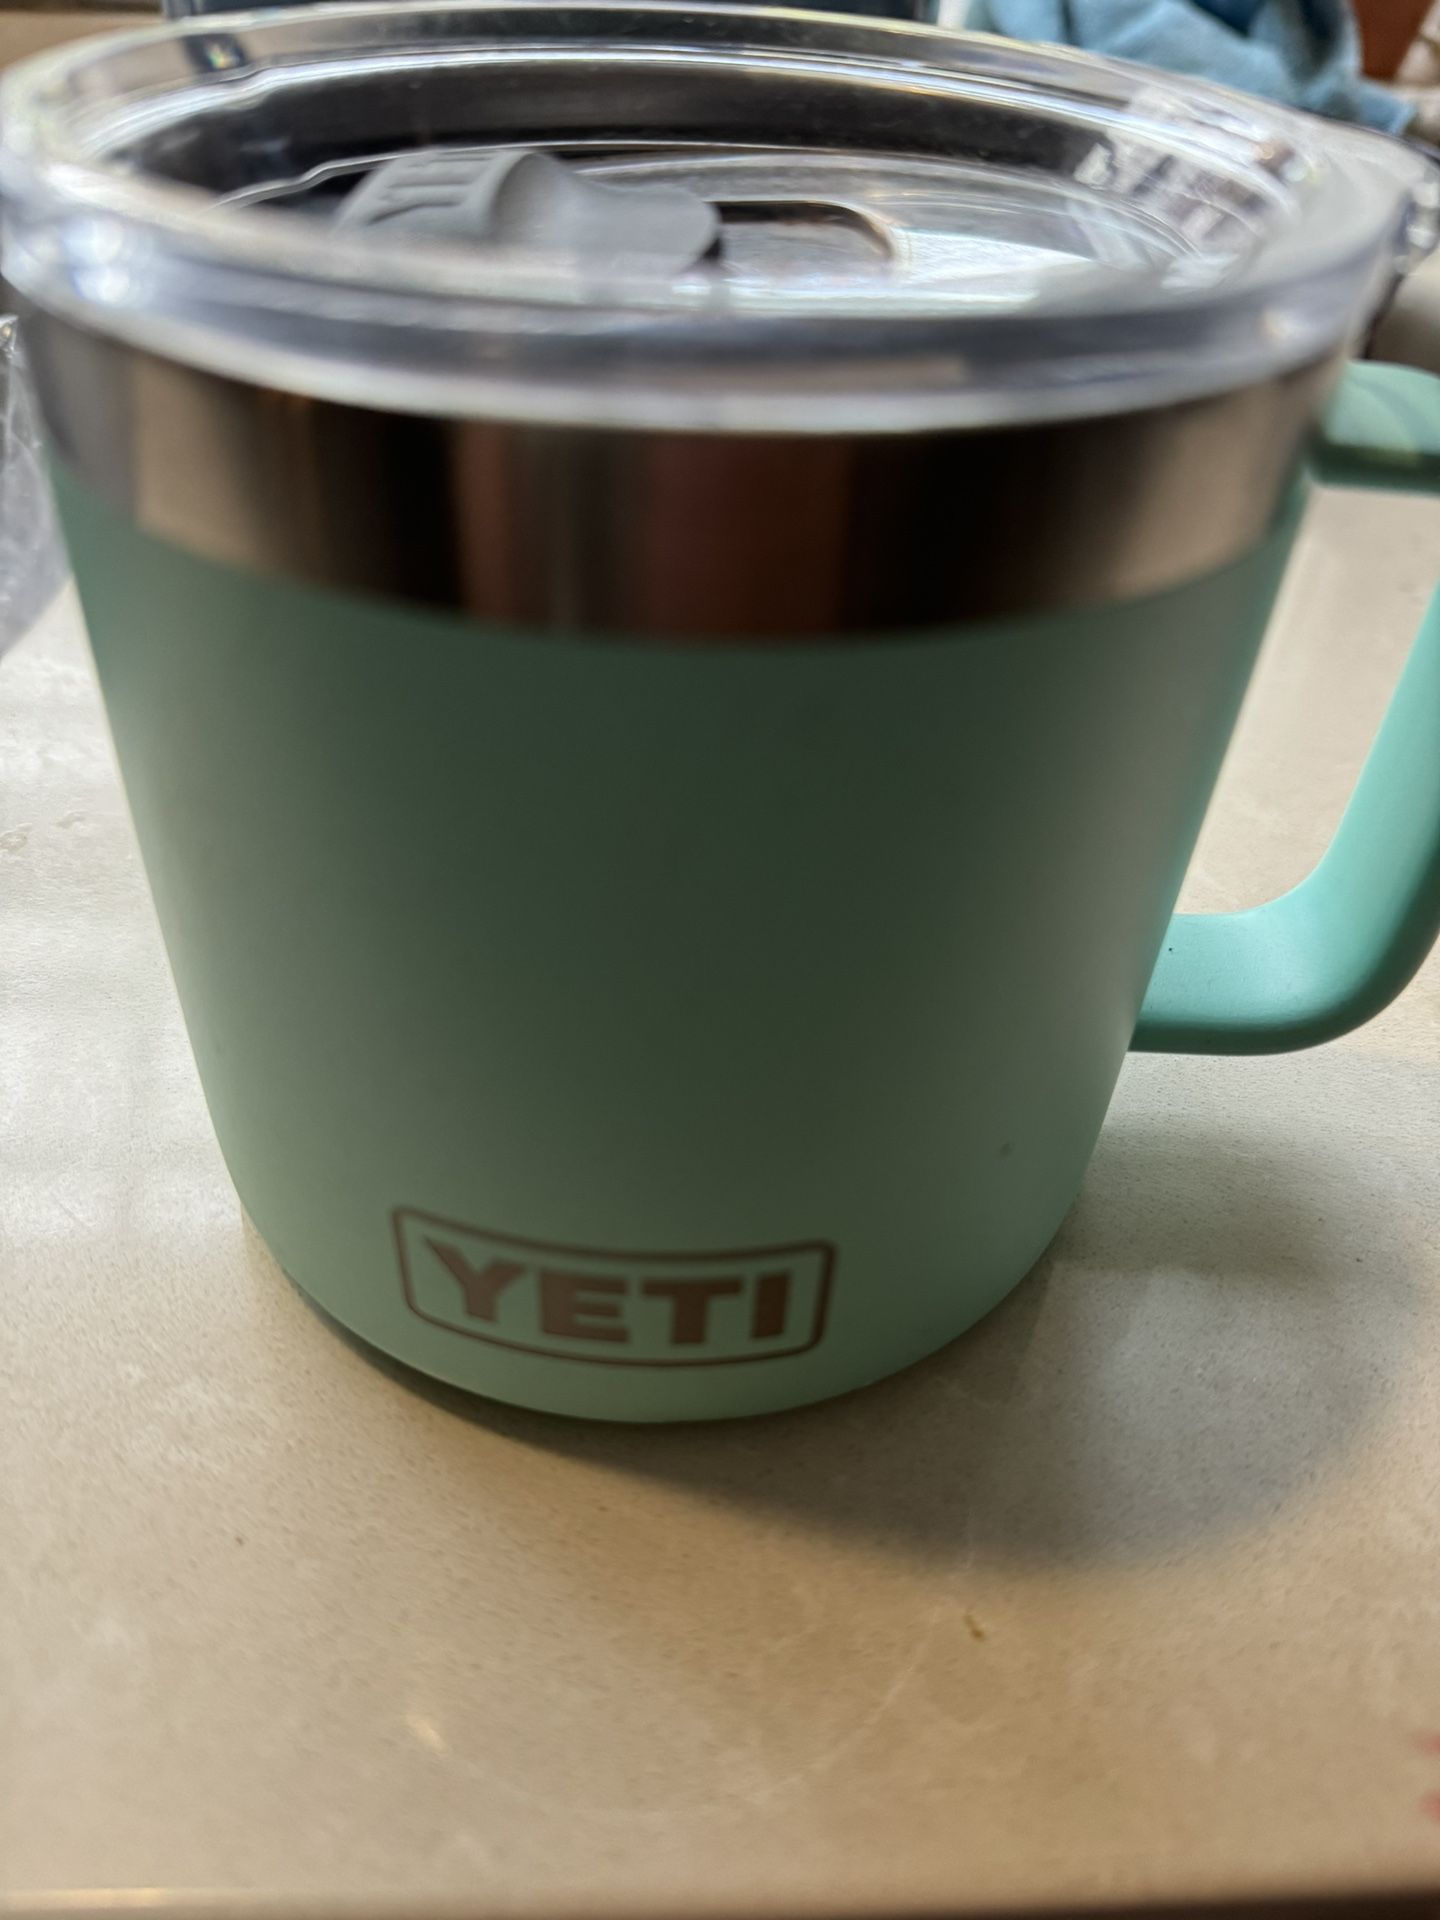 Yeti Coffee Cup 